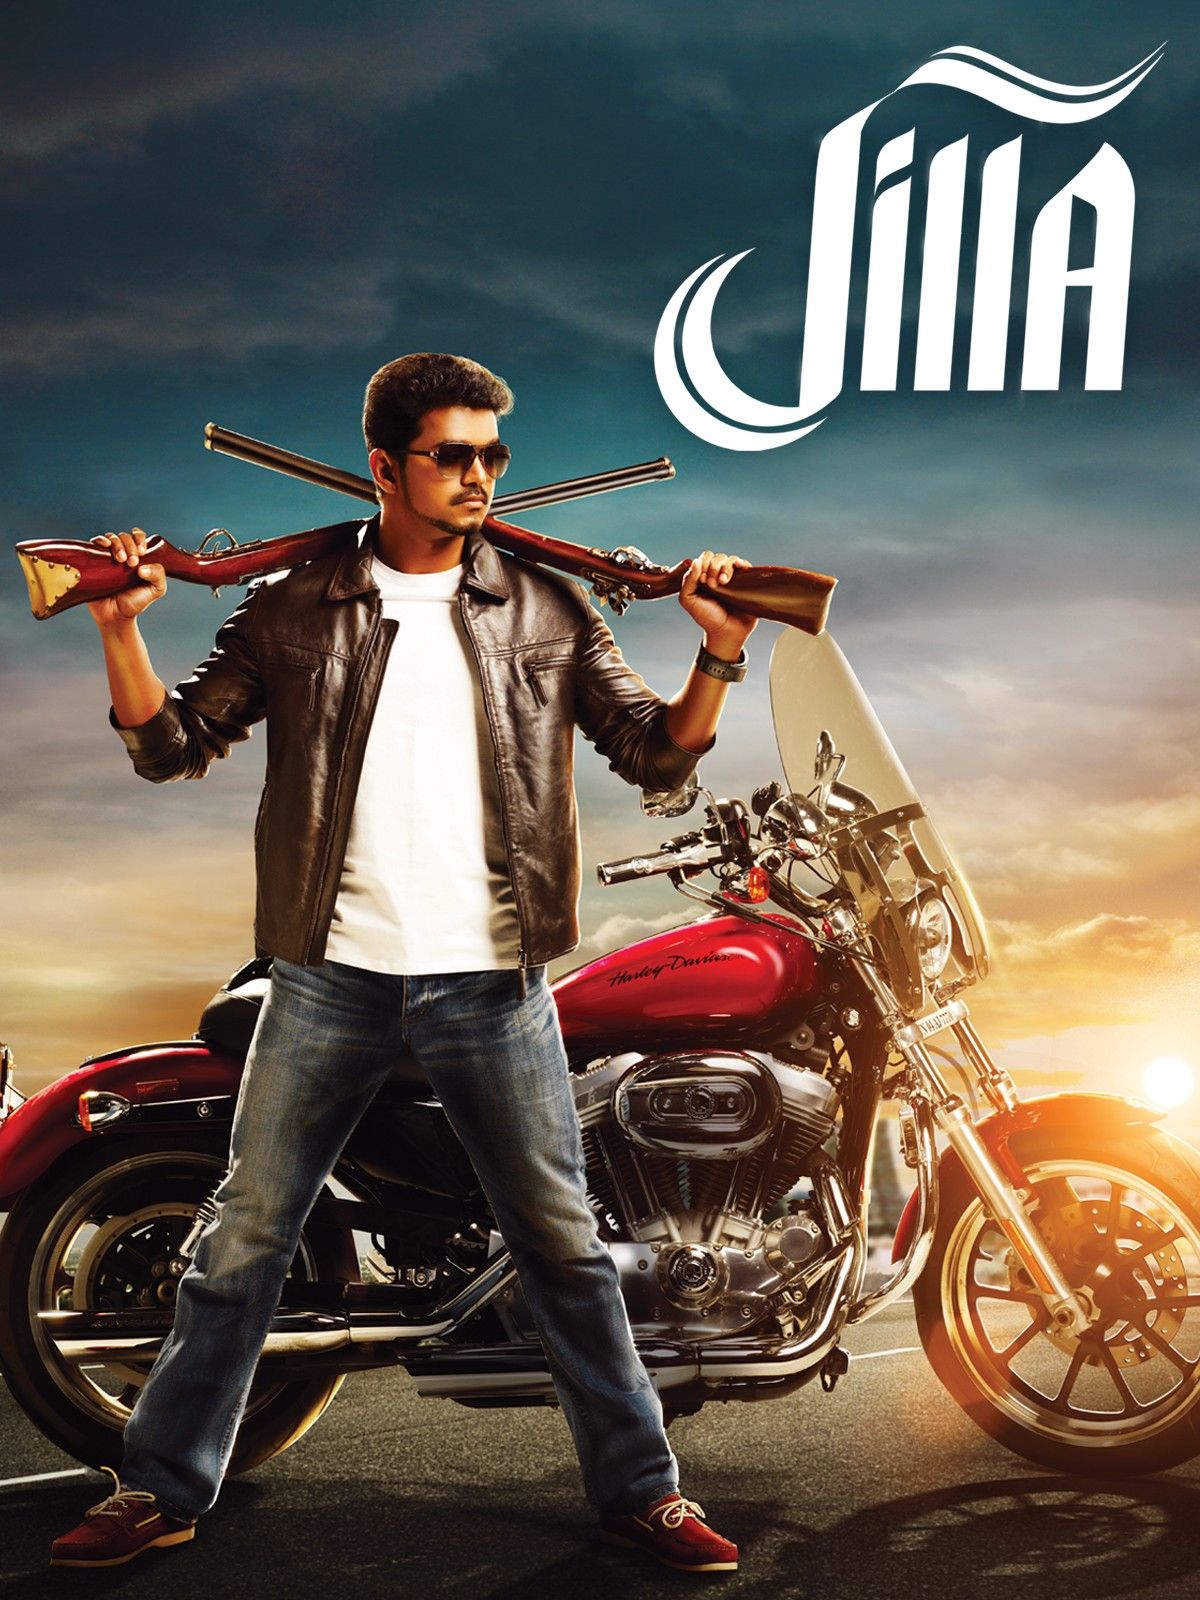 Jilla (2014) Hindi Dubbed BluRay download full movie